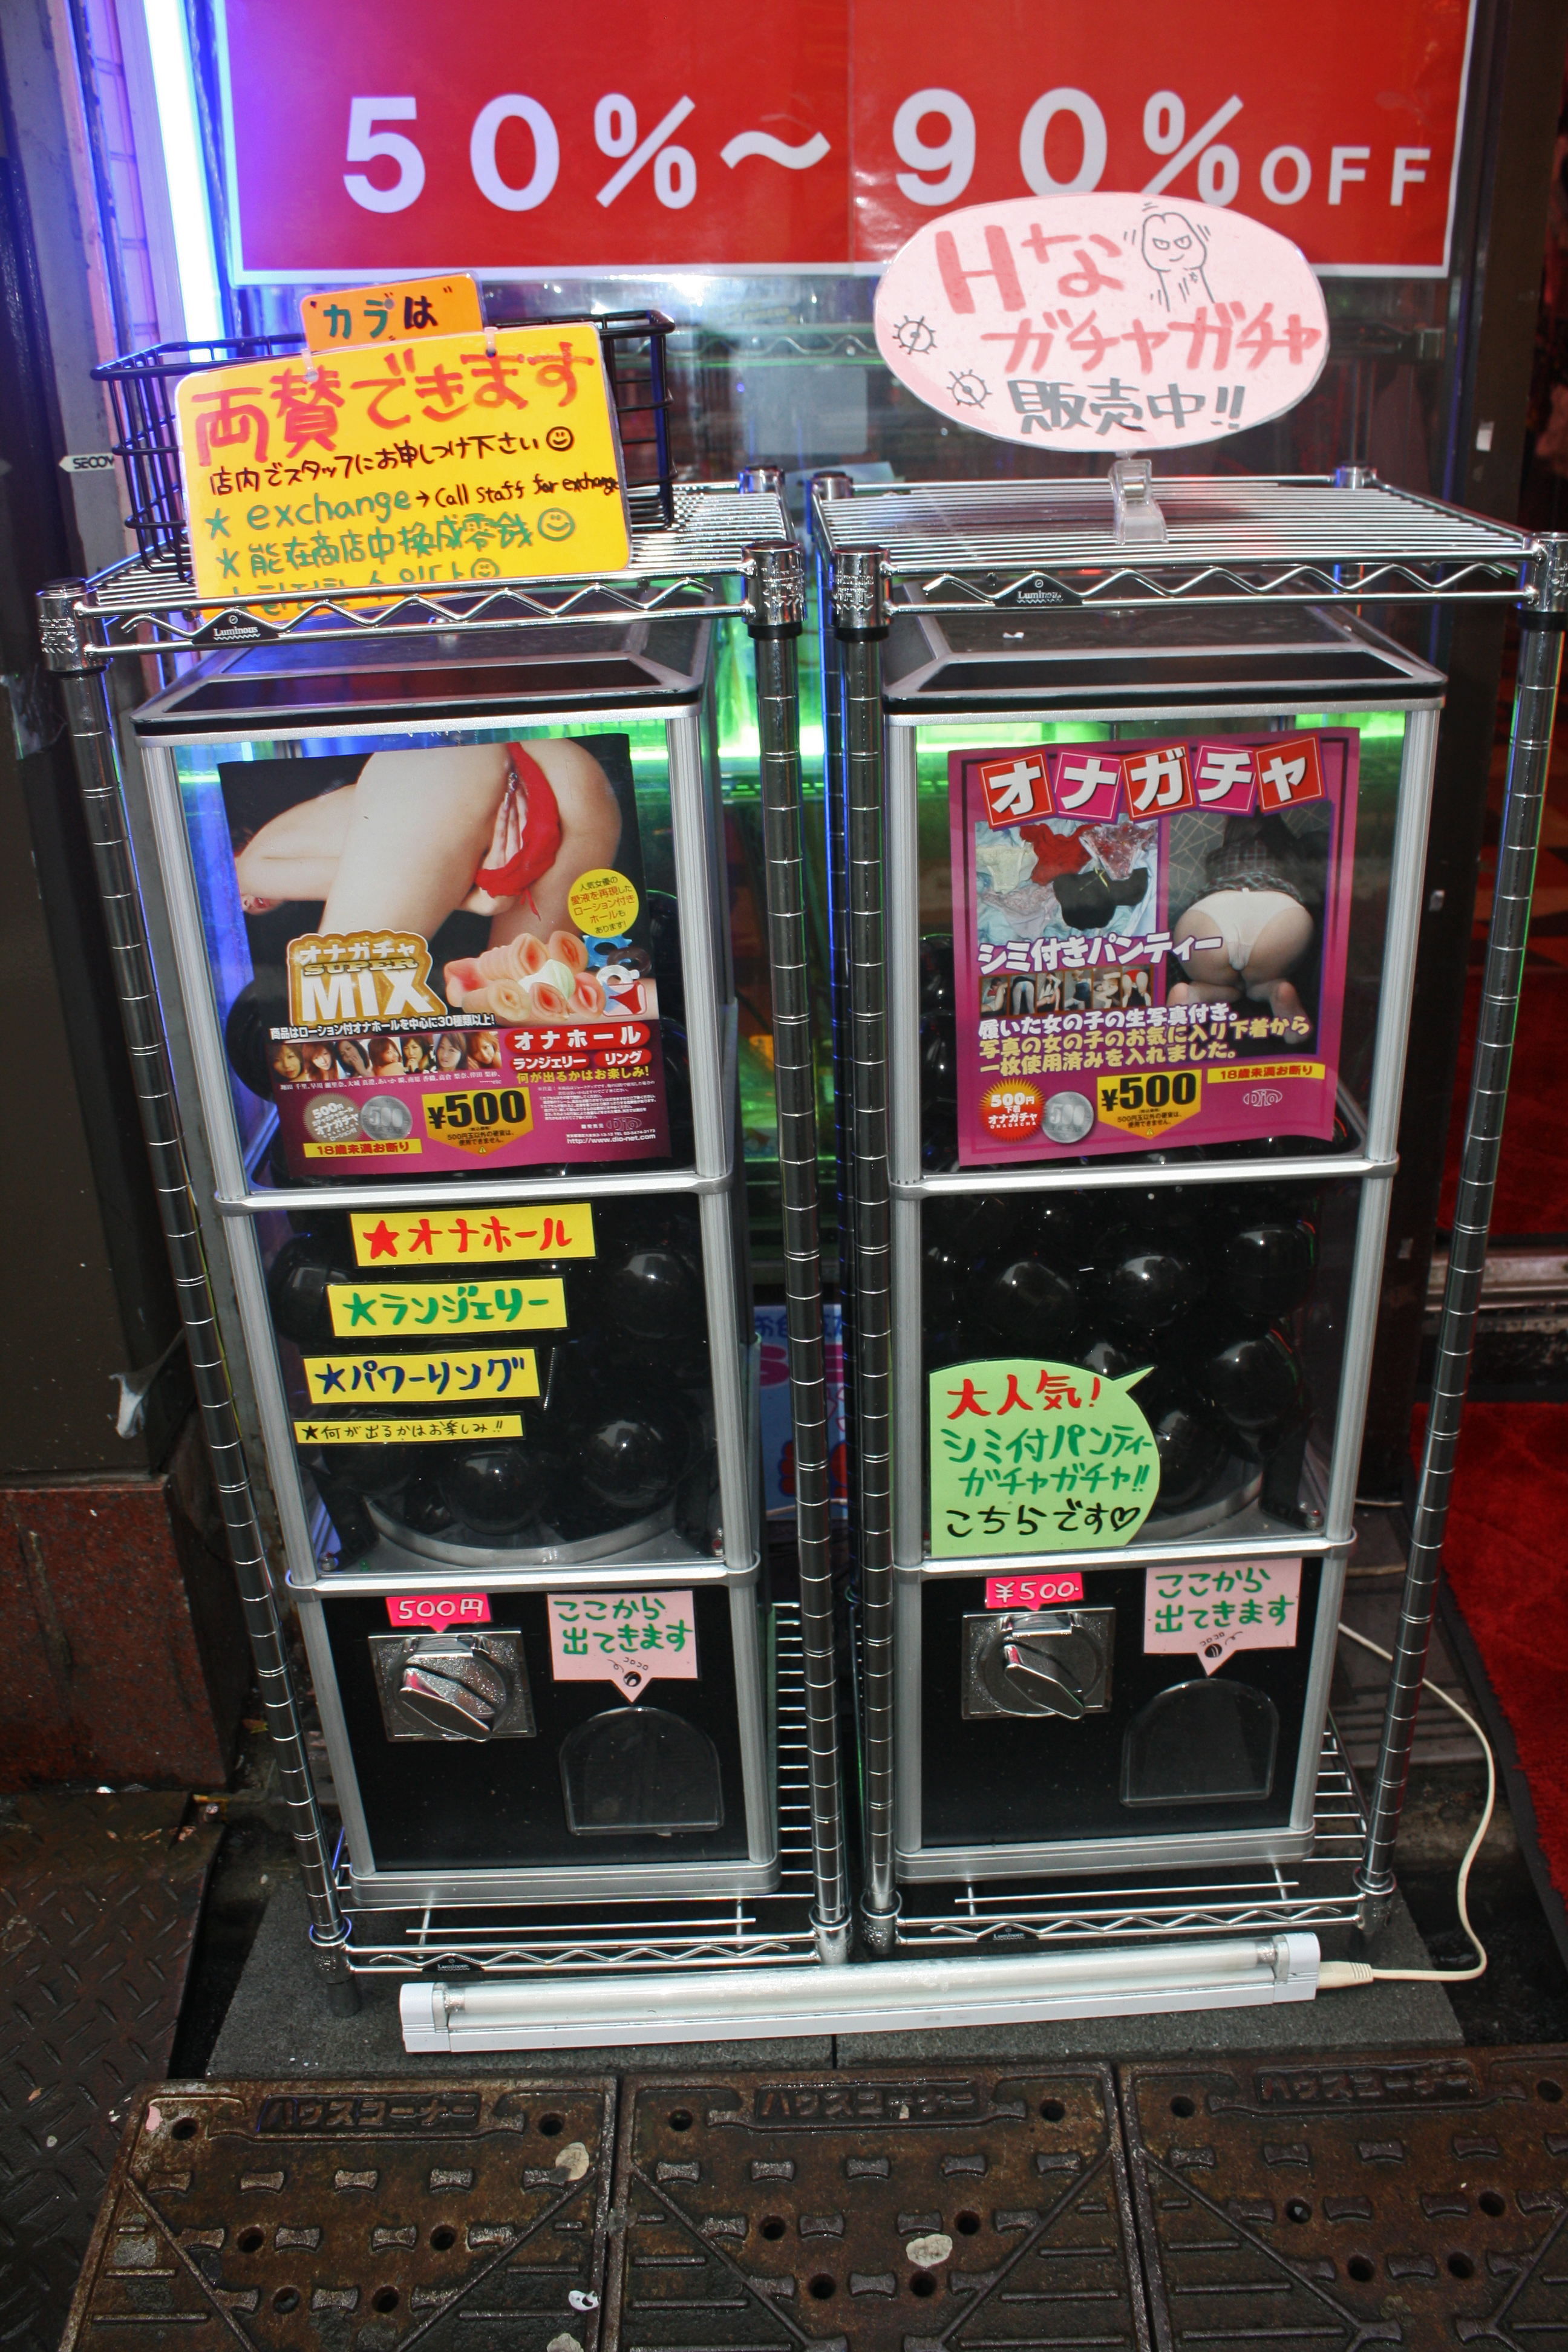 https://upload.wikimedia.org/wikipedia/commons/1/19/Japanese_panty_vending_machine_2010.jpg